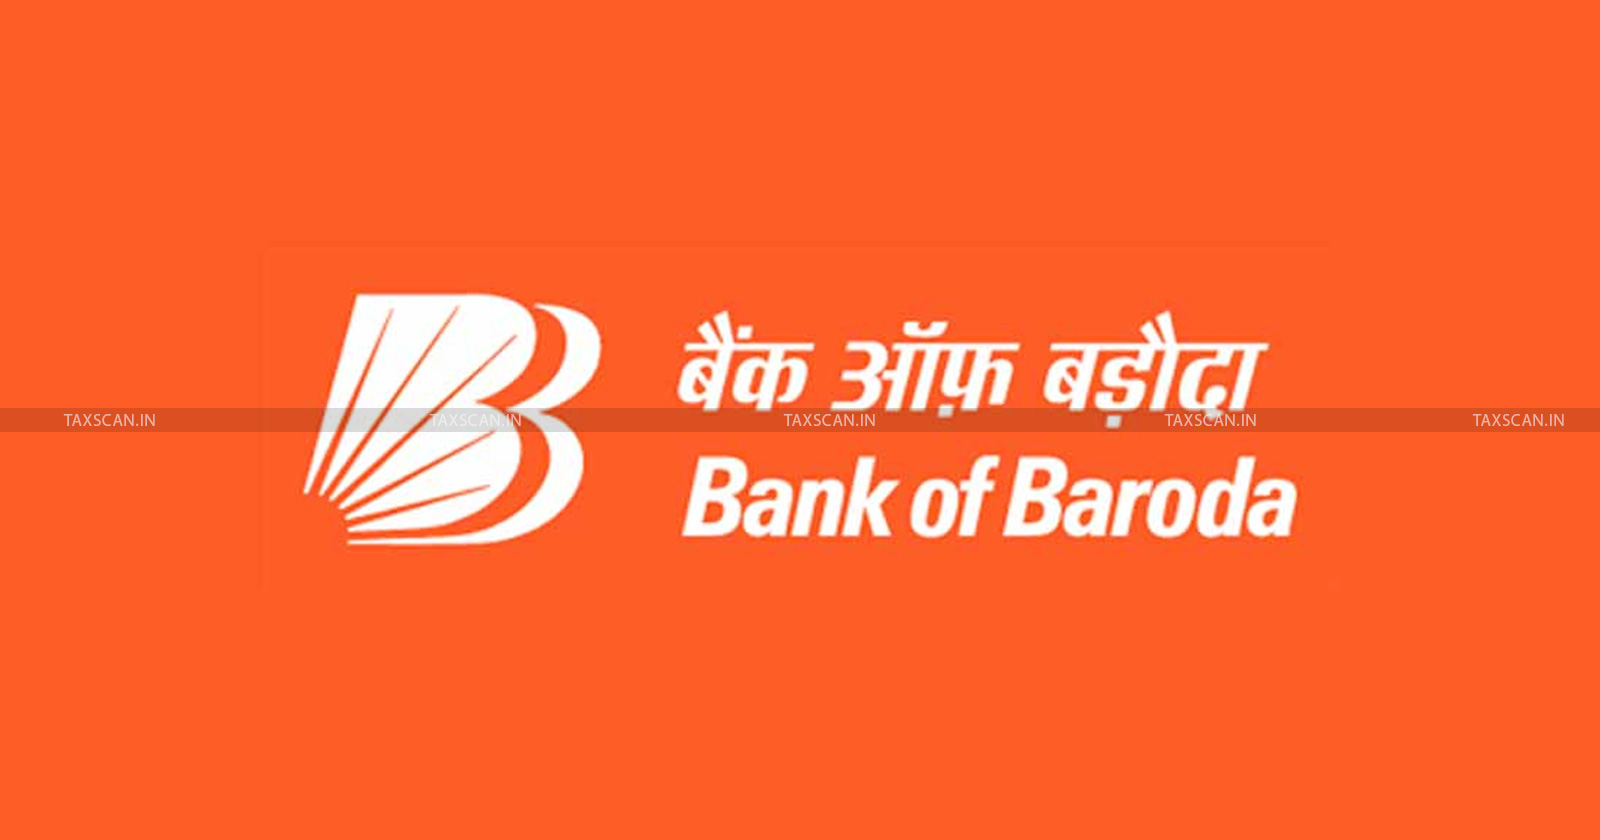 ITAT - Income Tax - ITAT Ahmedabad - Deduction - Bank of Baroda - Fixed Deposit Receipts - TAXSCAN